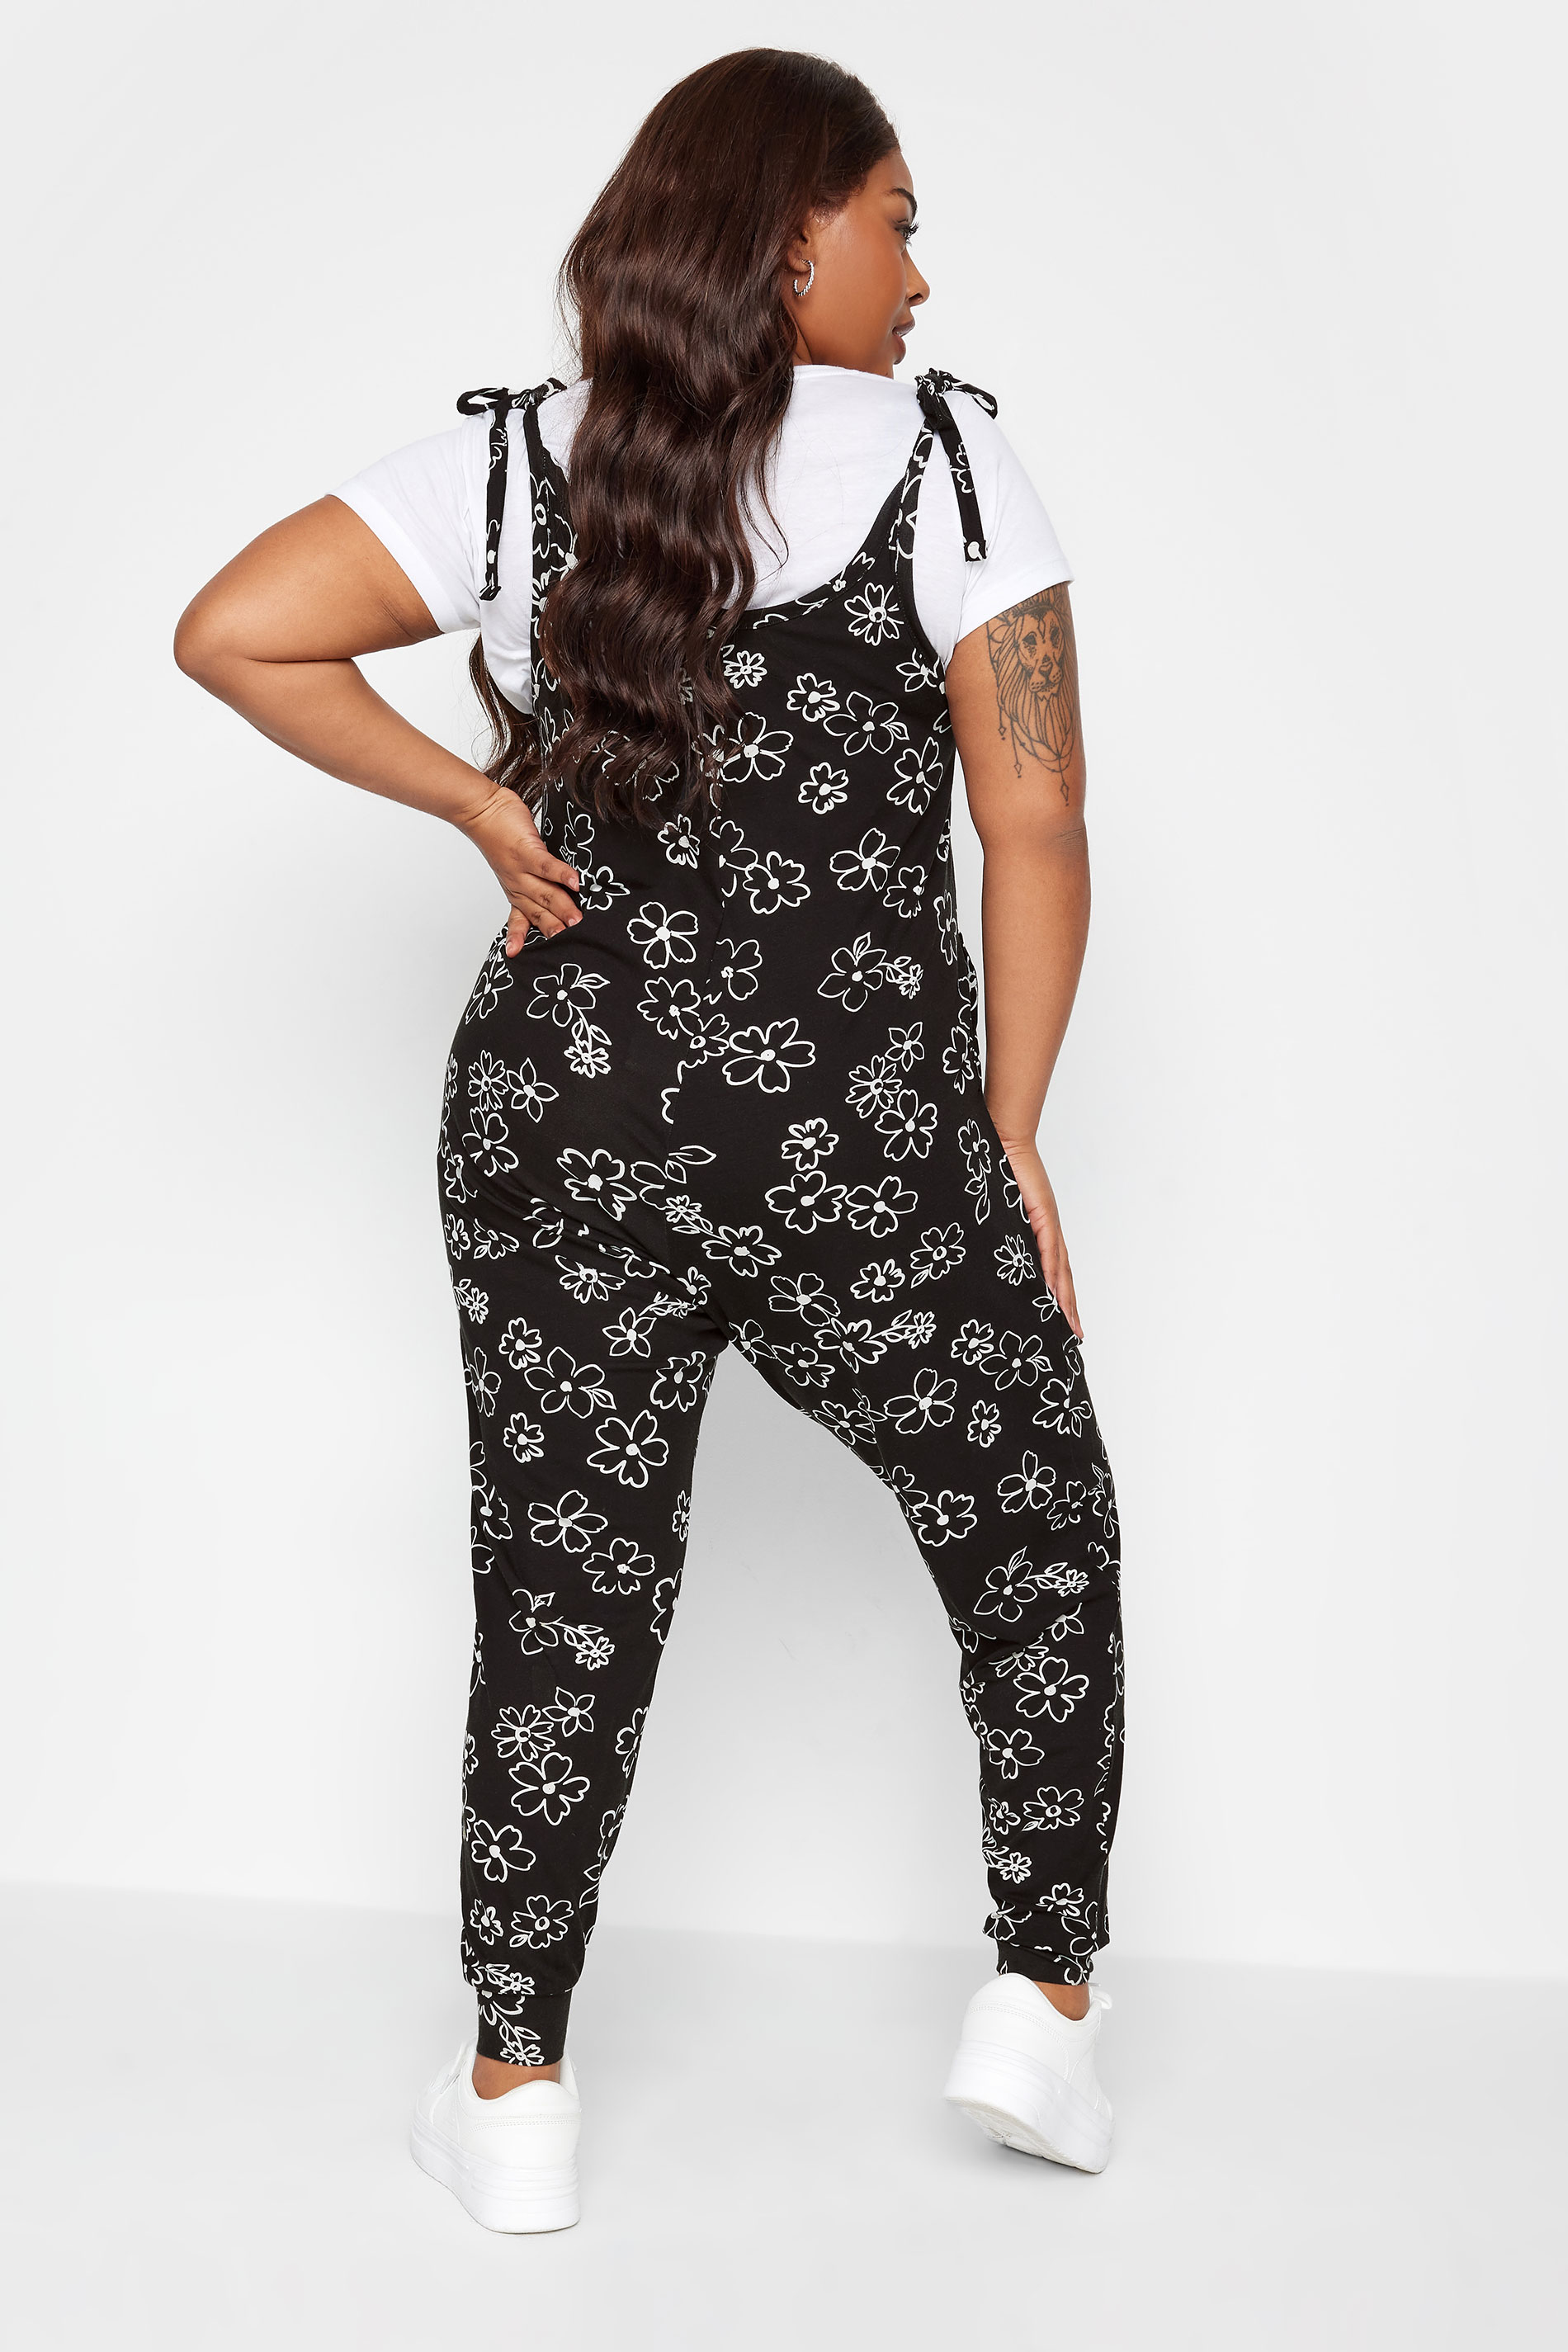 BUMP IT UP MATERNITY Plus Size Black Floral Print Jumpsuit | Yours Clothing 3